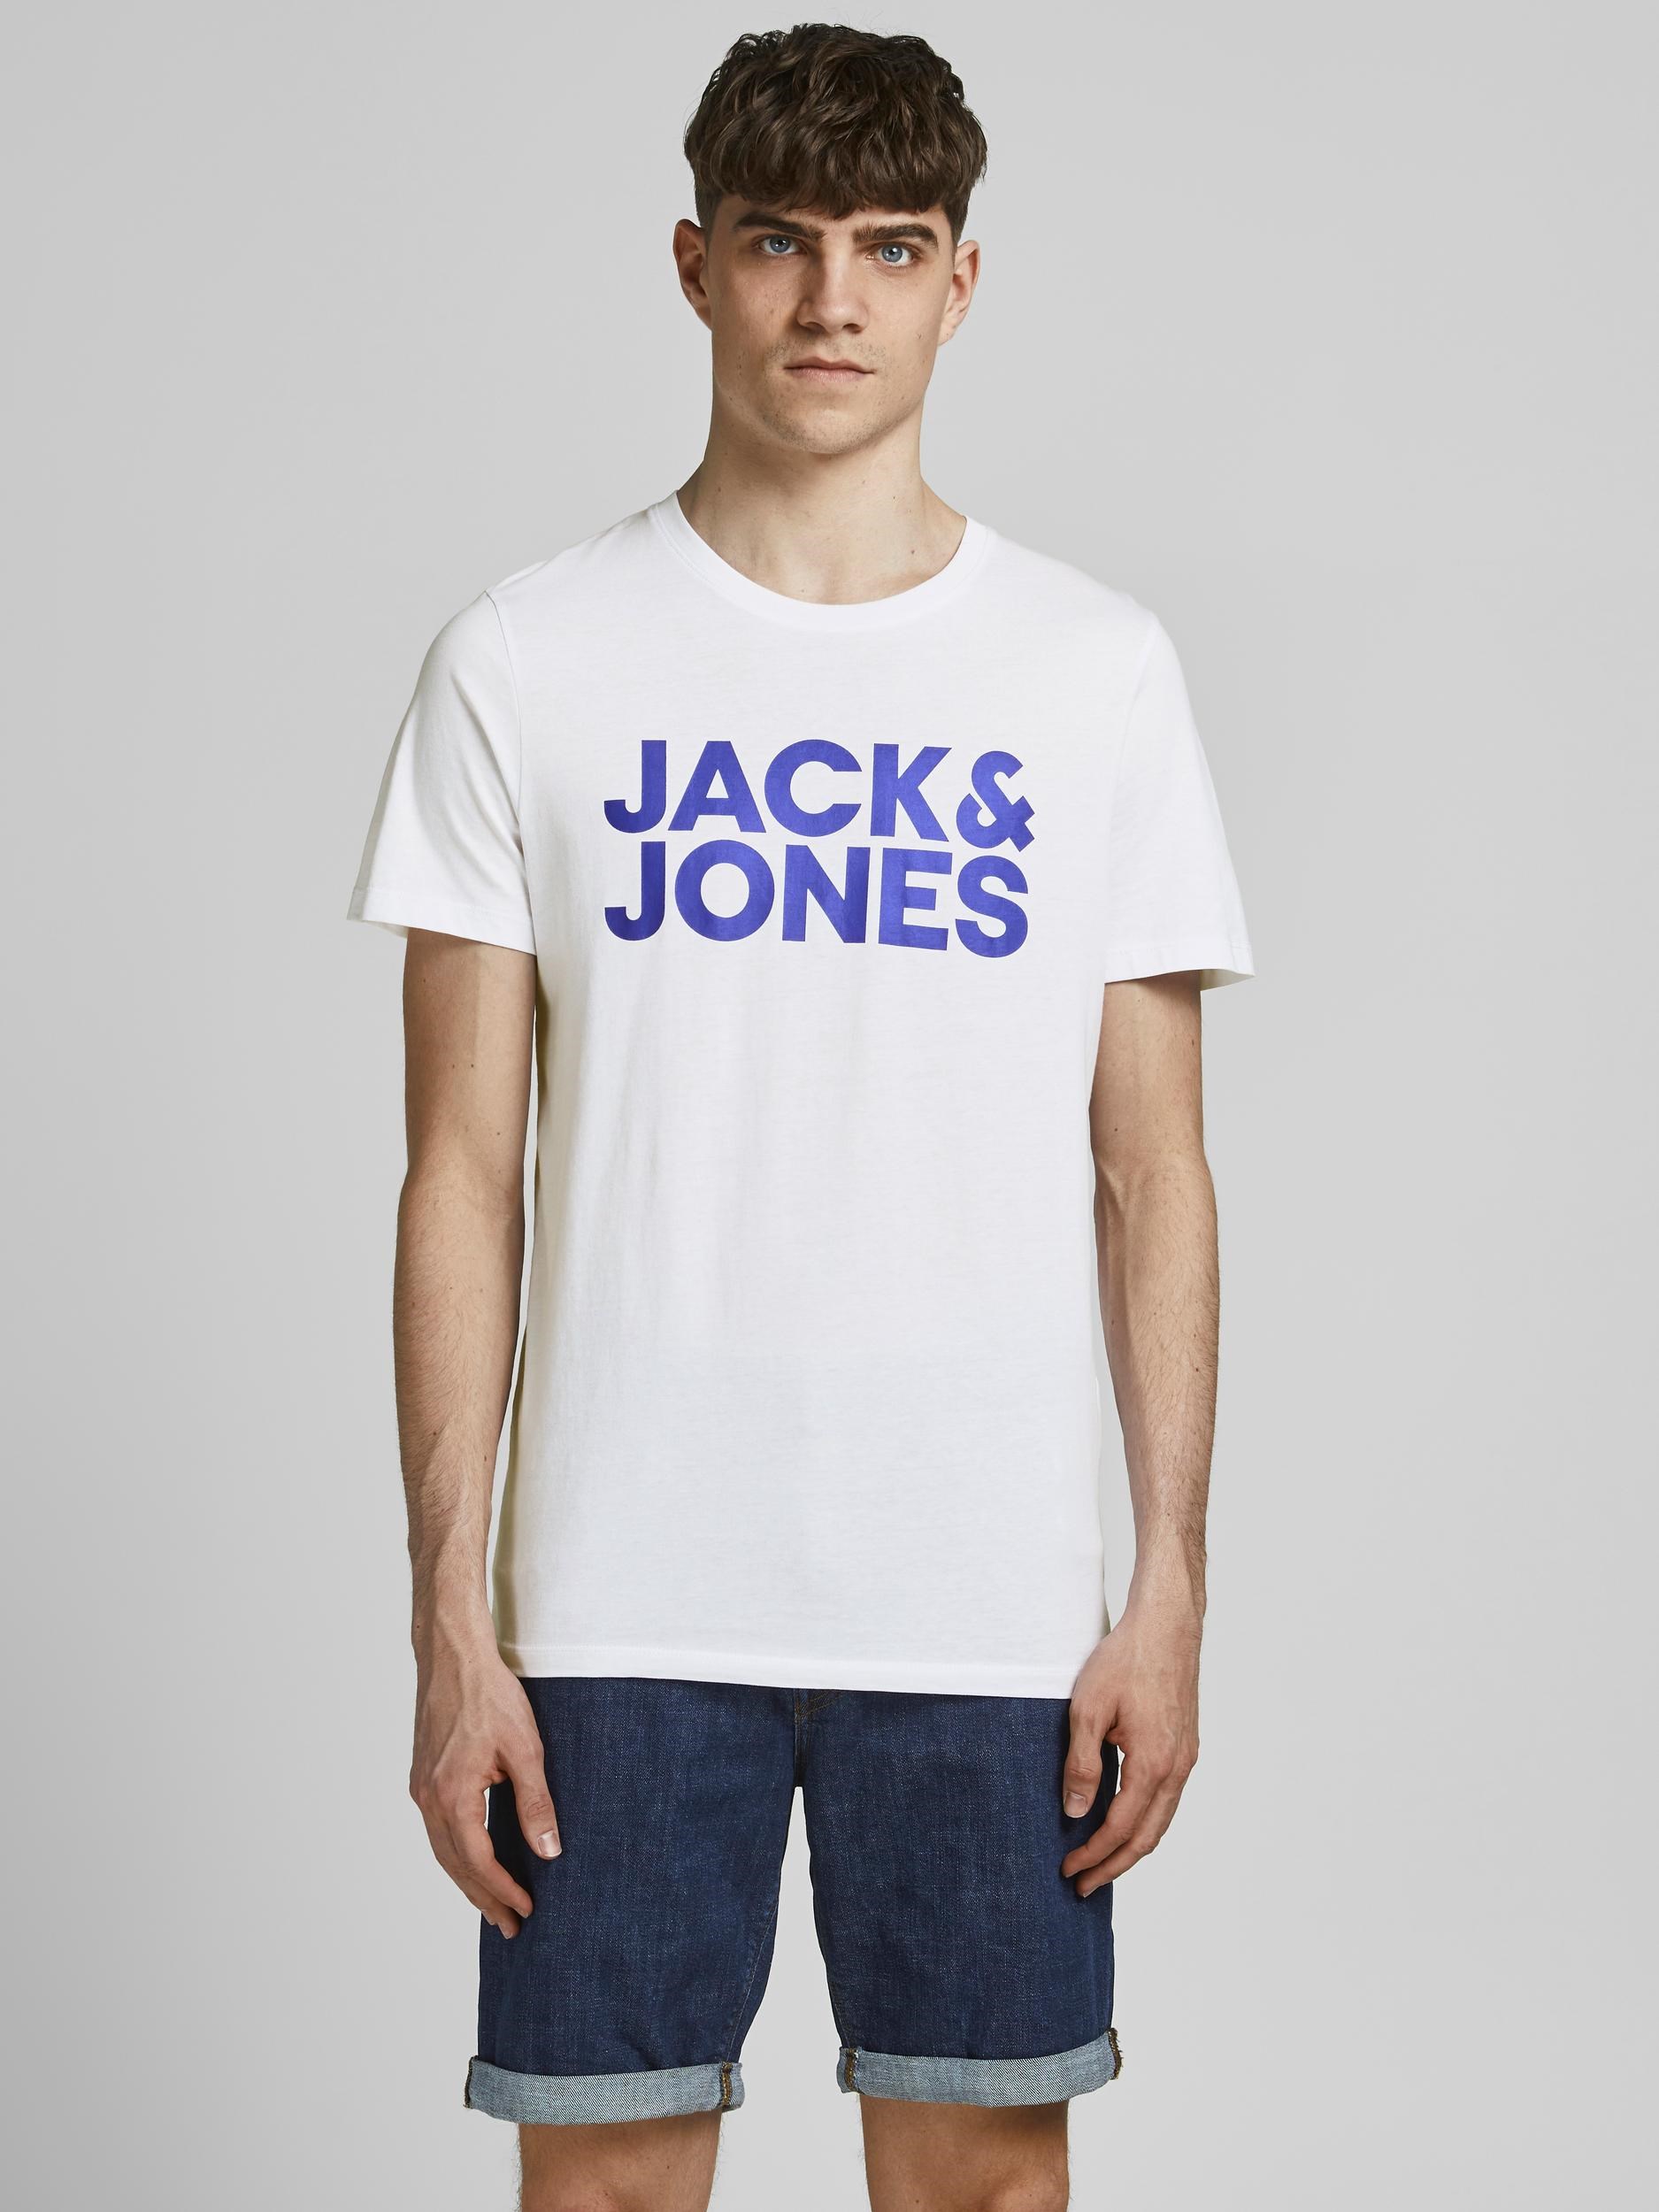 Jack Jones Erkek T-Shirt 12151955 White